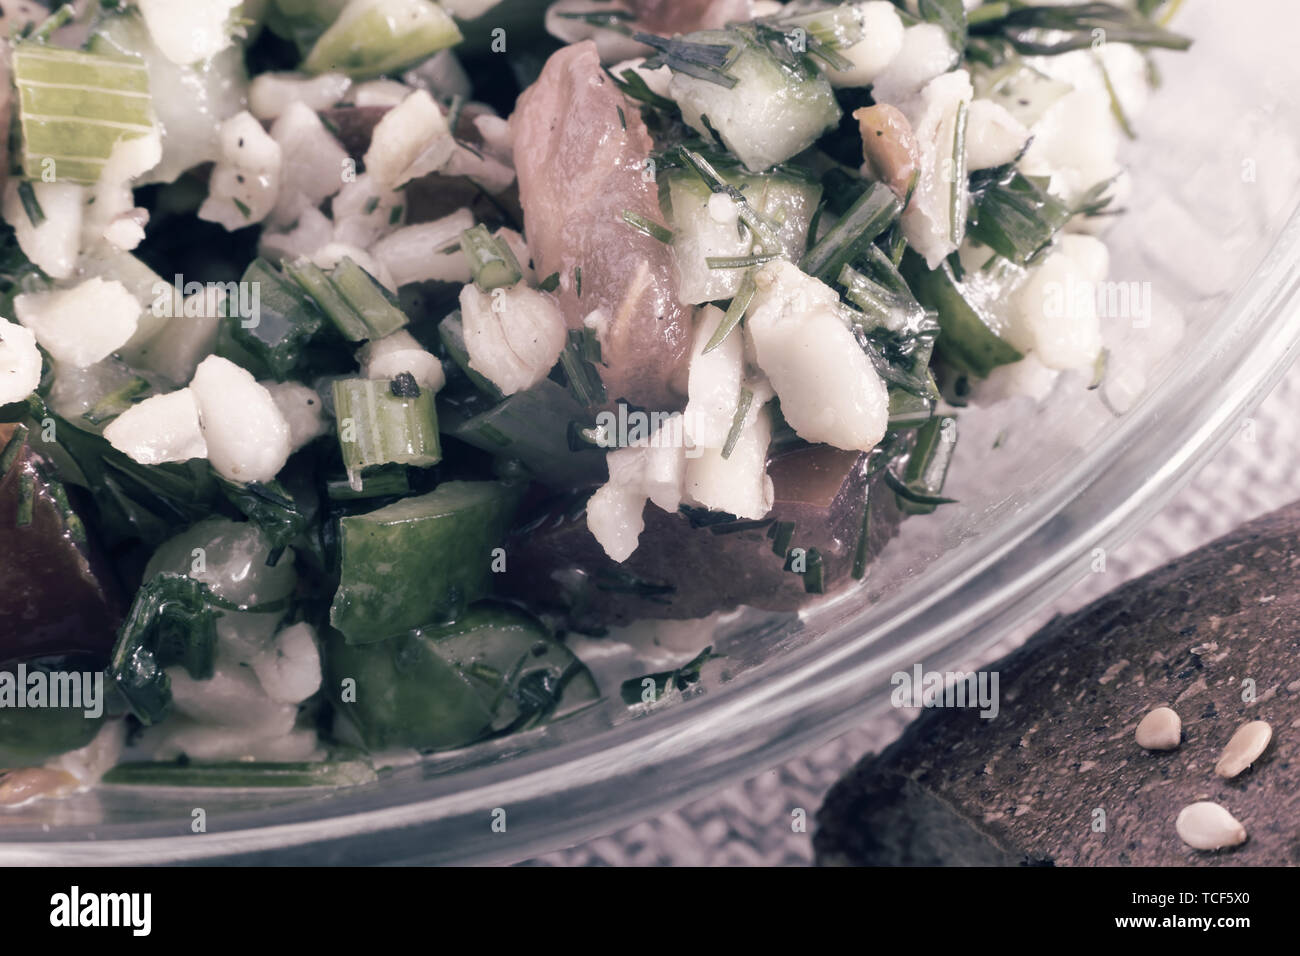 Salad Tabule - a common dish of Arabic cuisine. Stock Photo